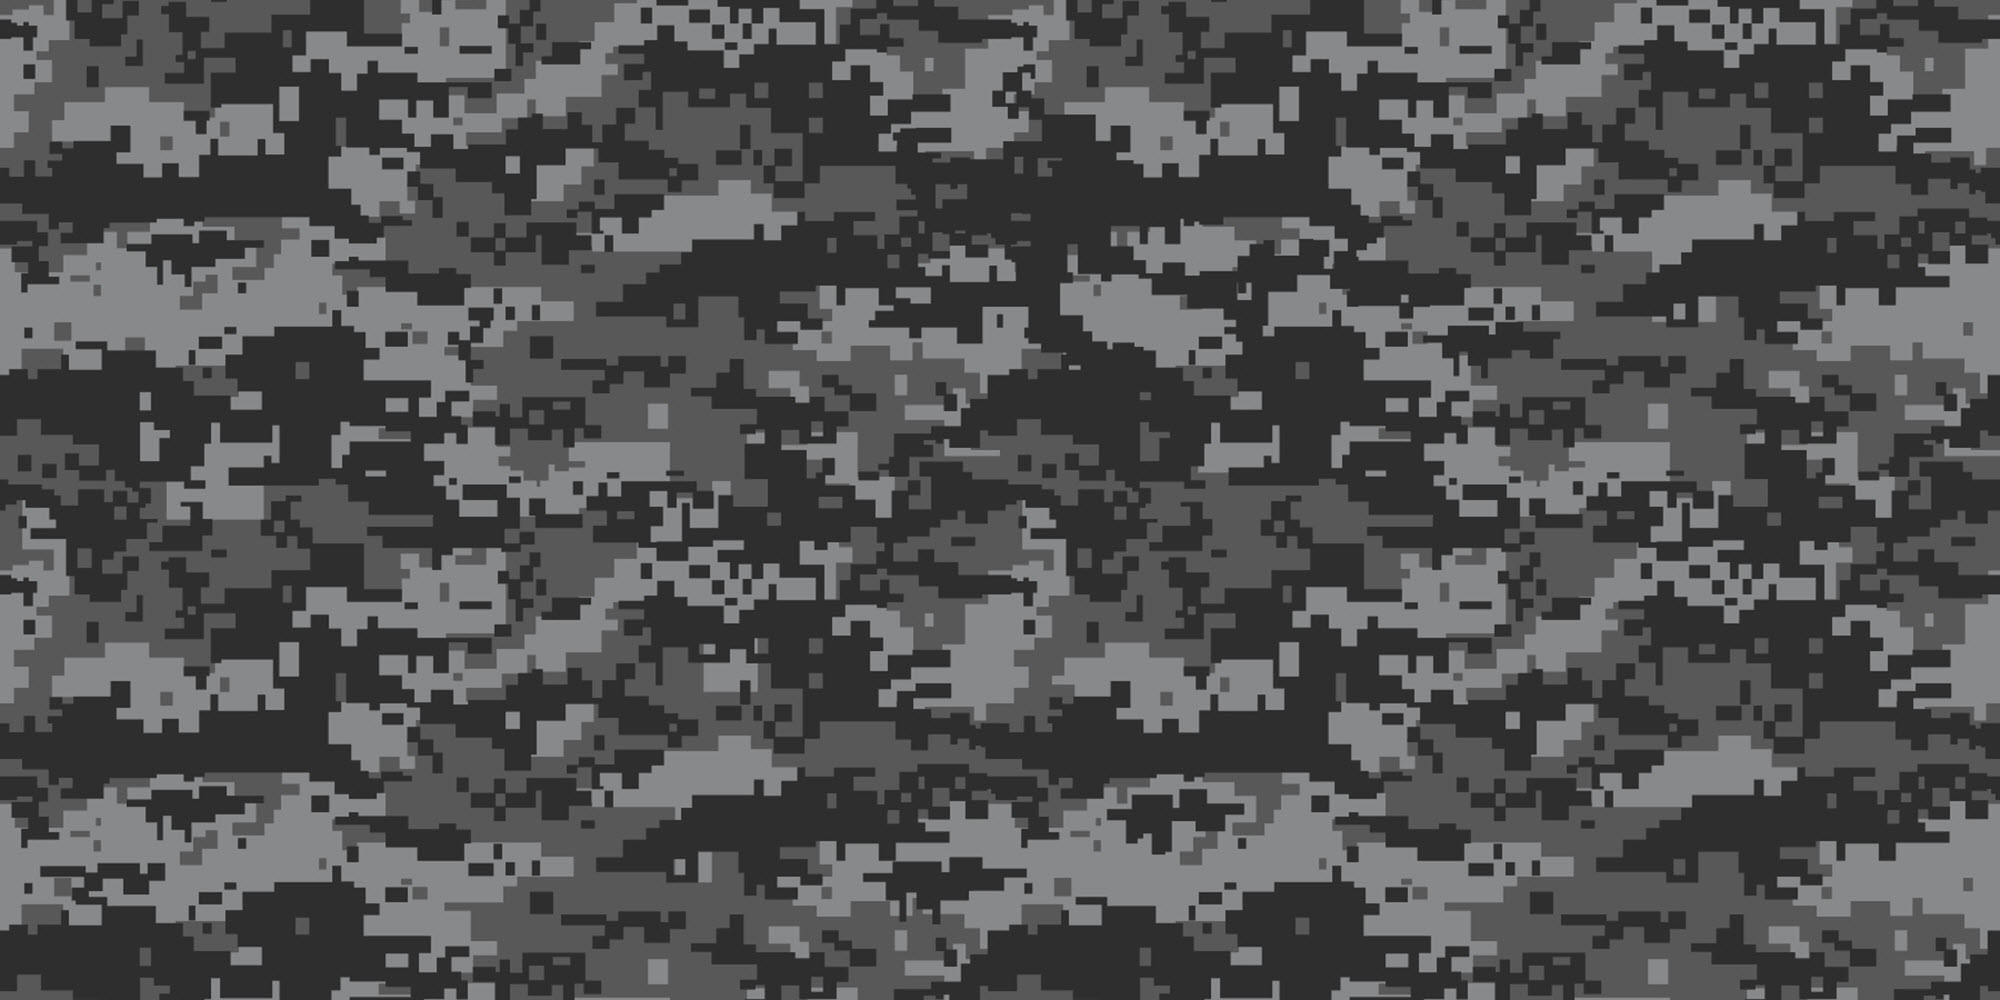 digital camouflage